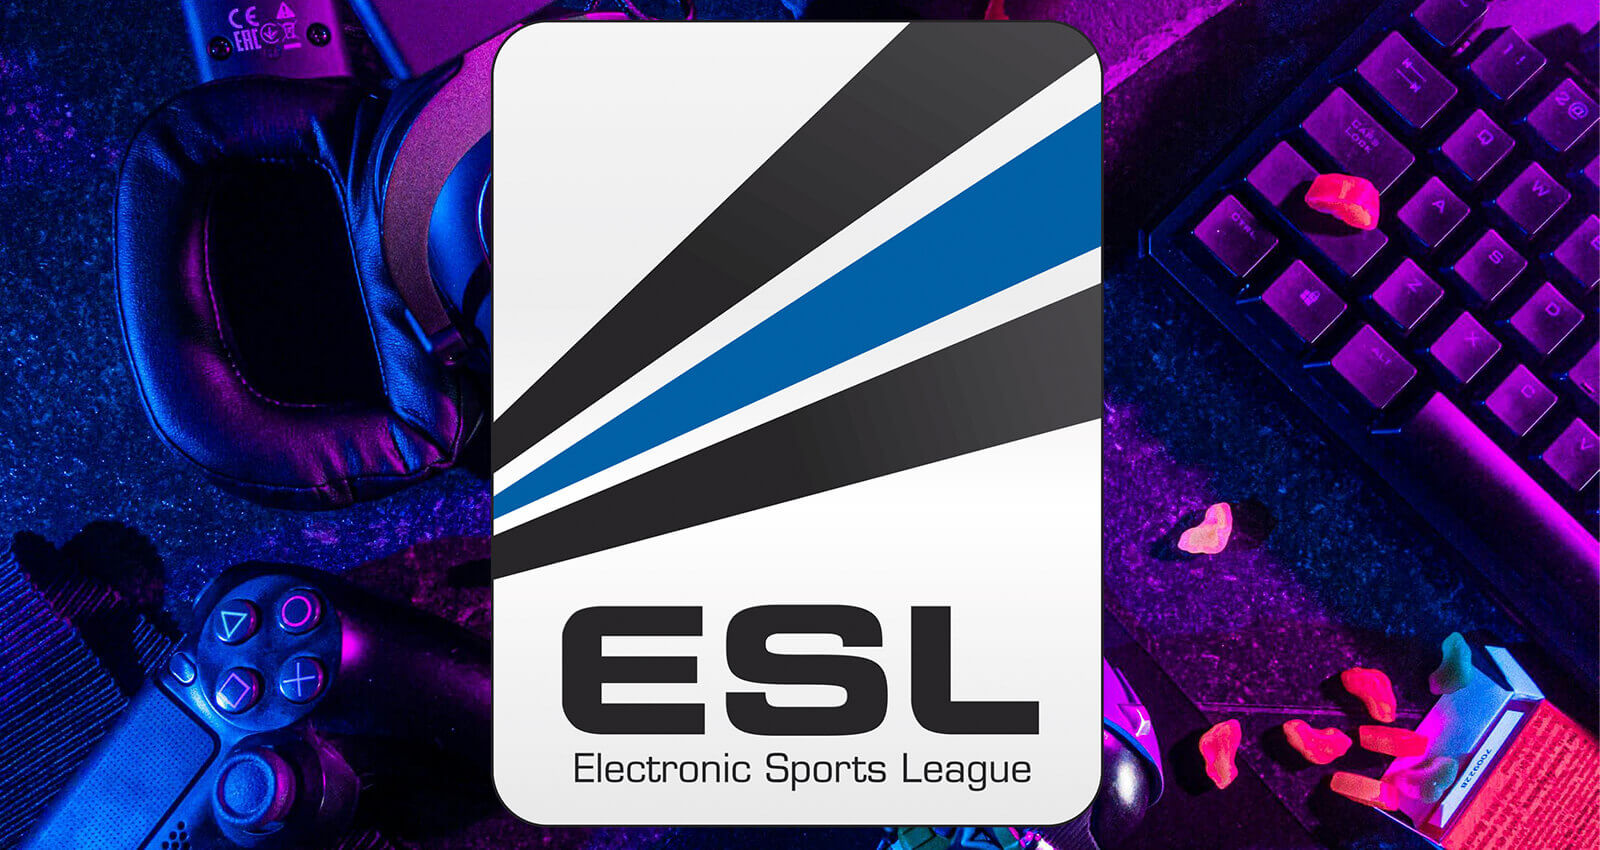 ESL organizes tournaments worldwide for many games